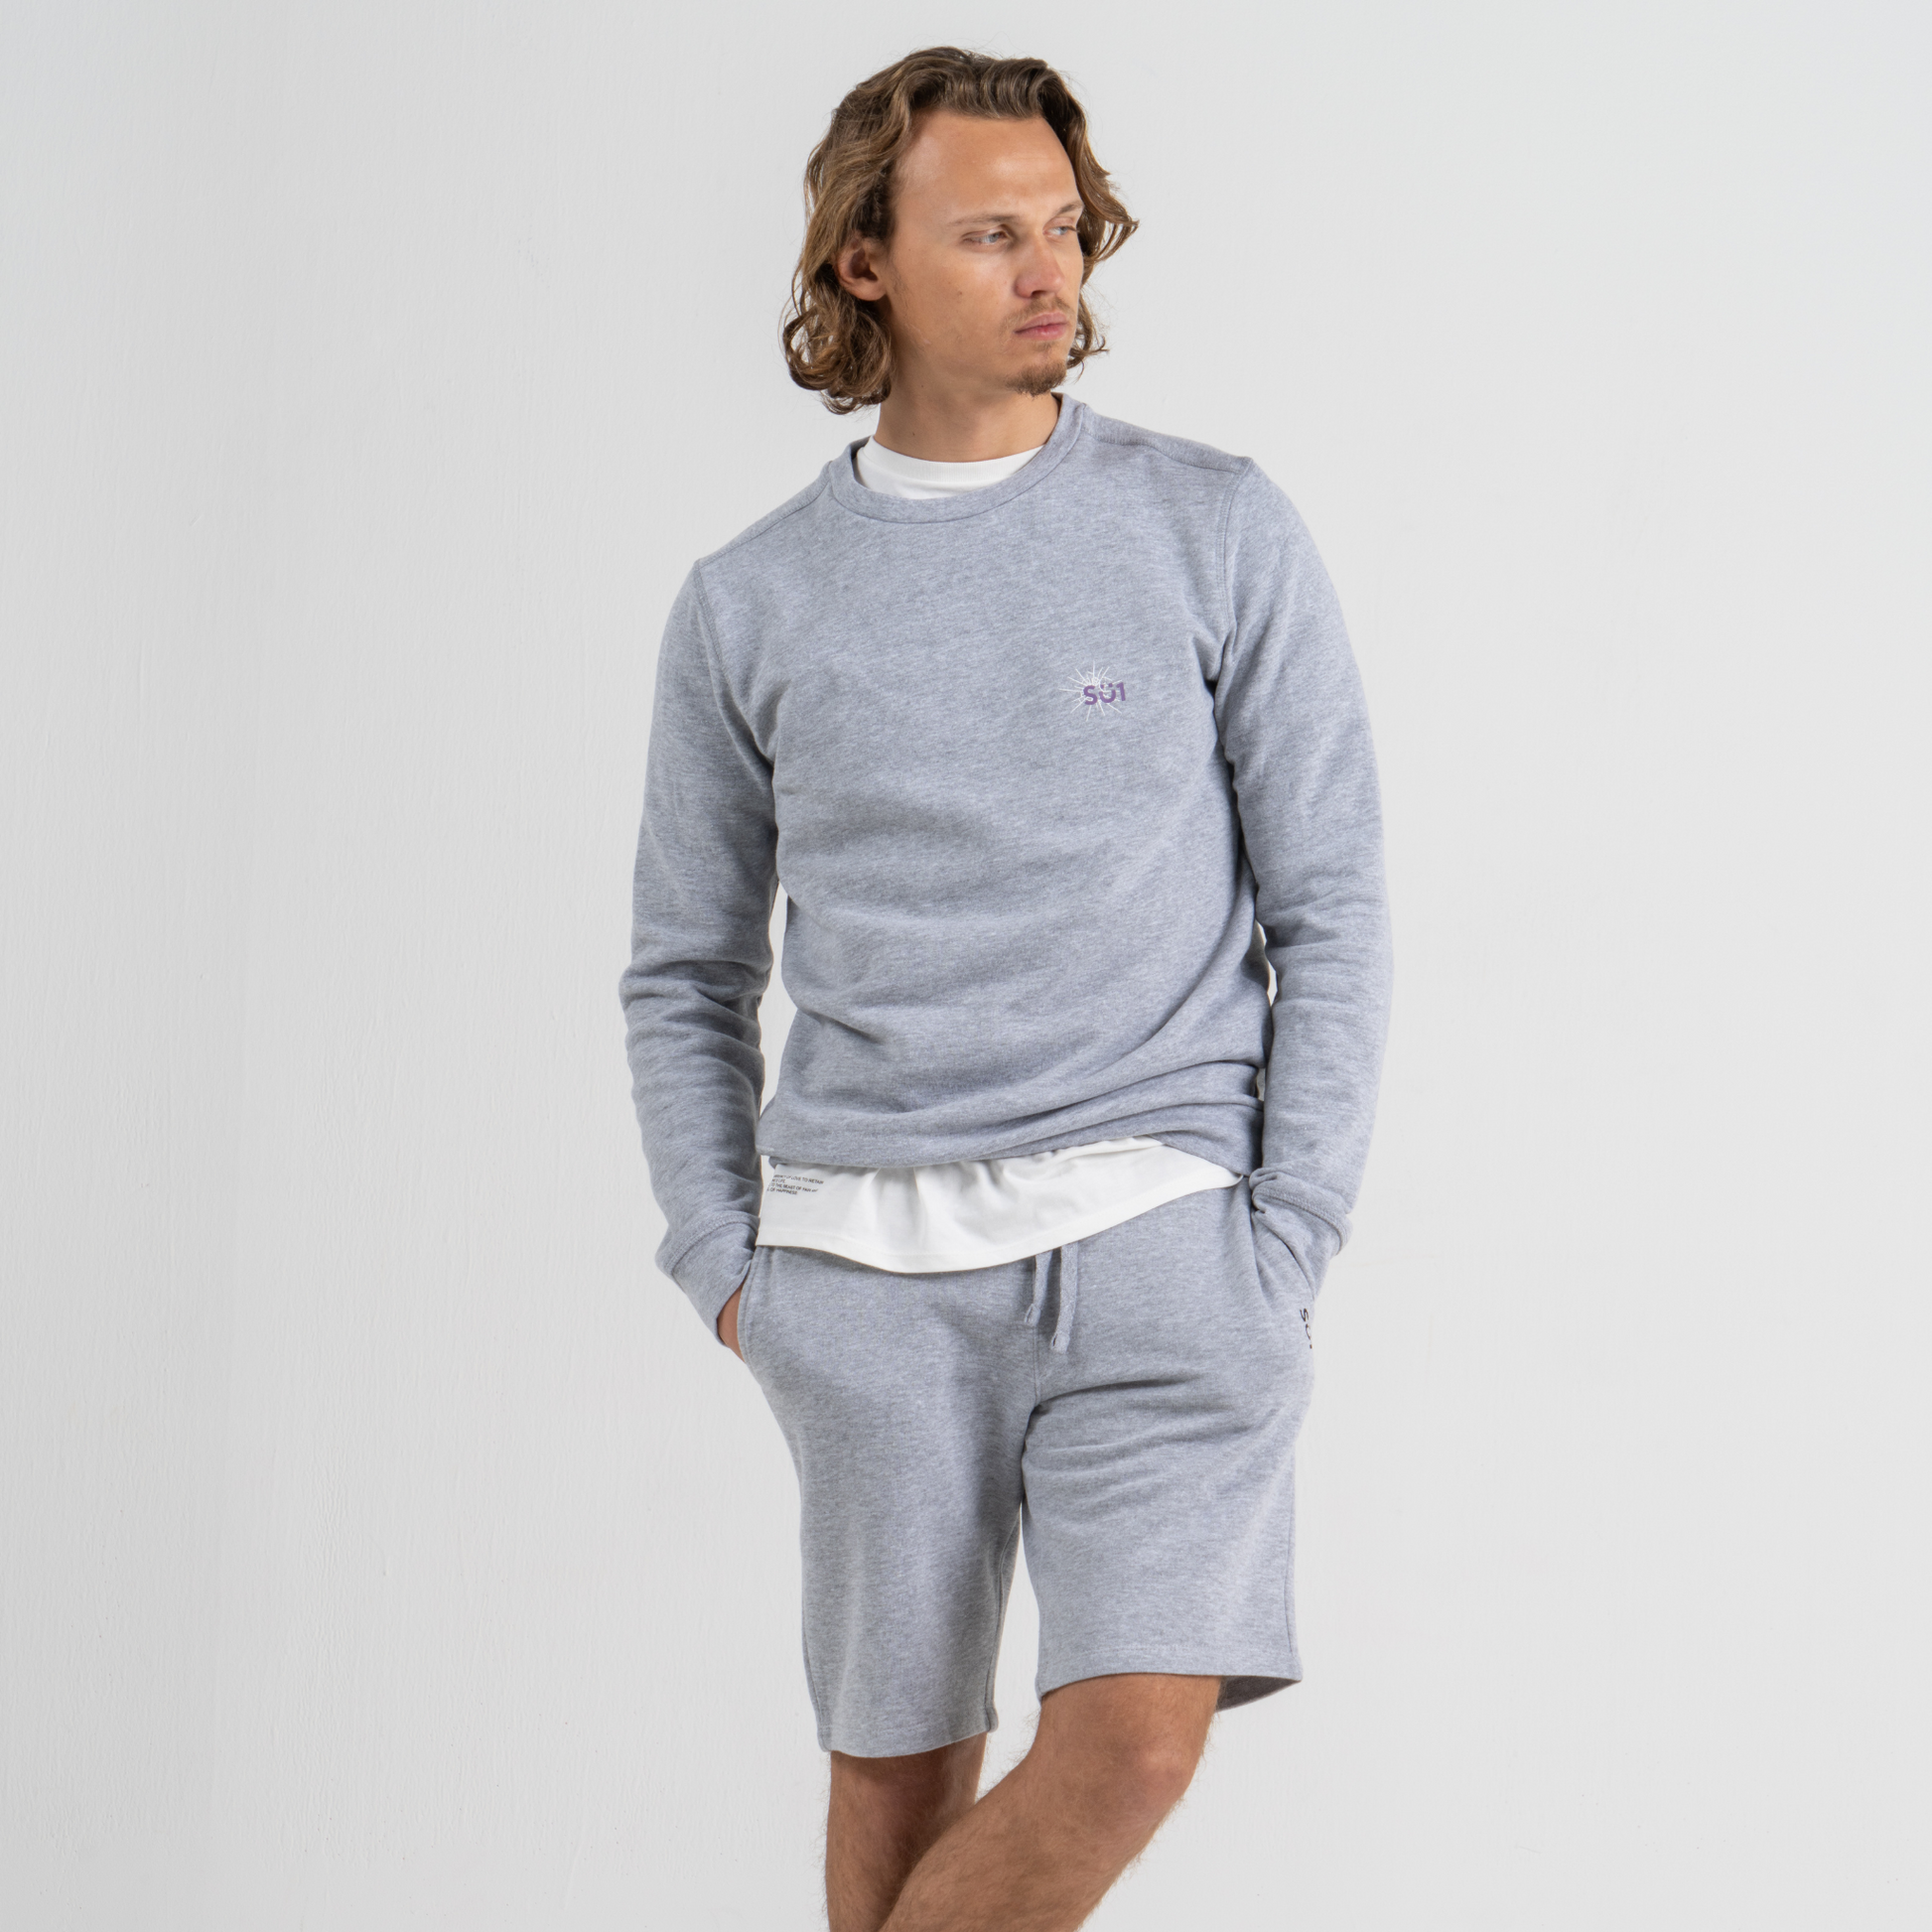 Man wearing grey sweater SU1 clothing brand and grey shorts